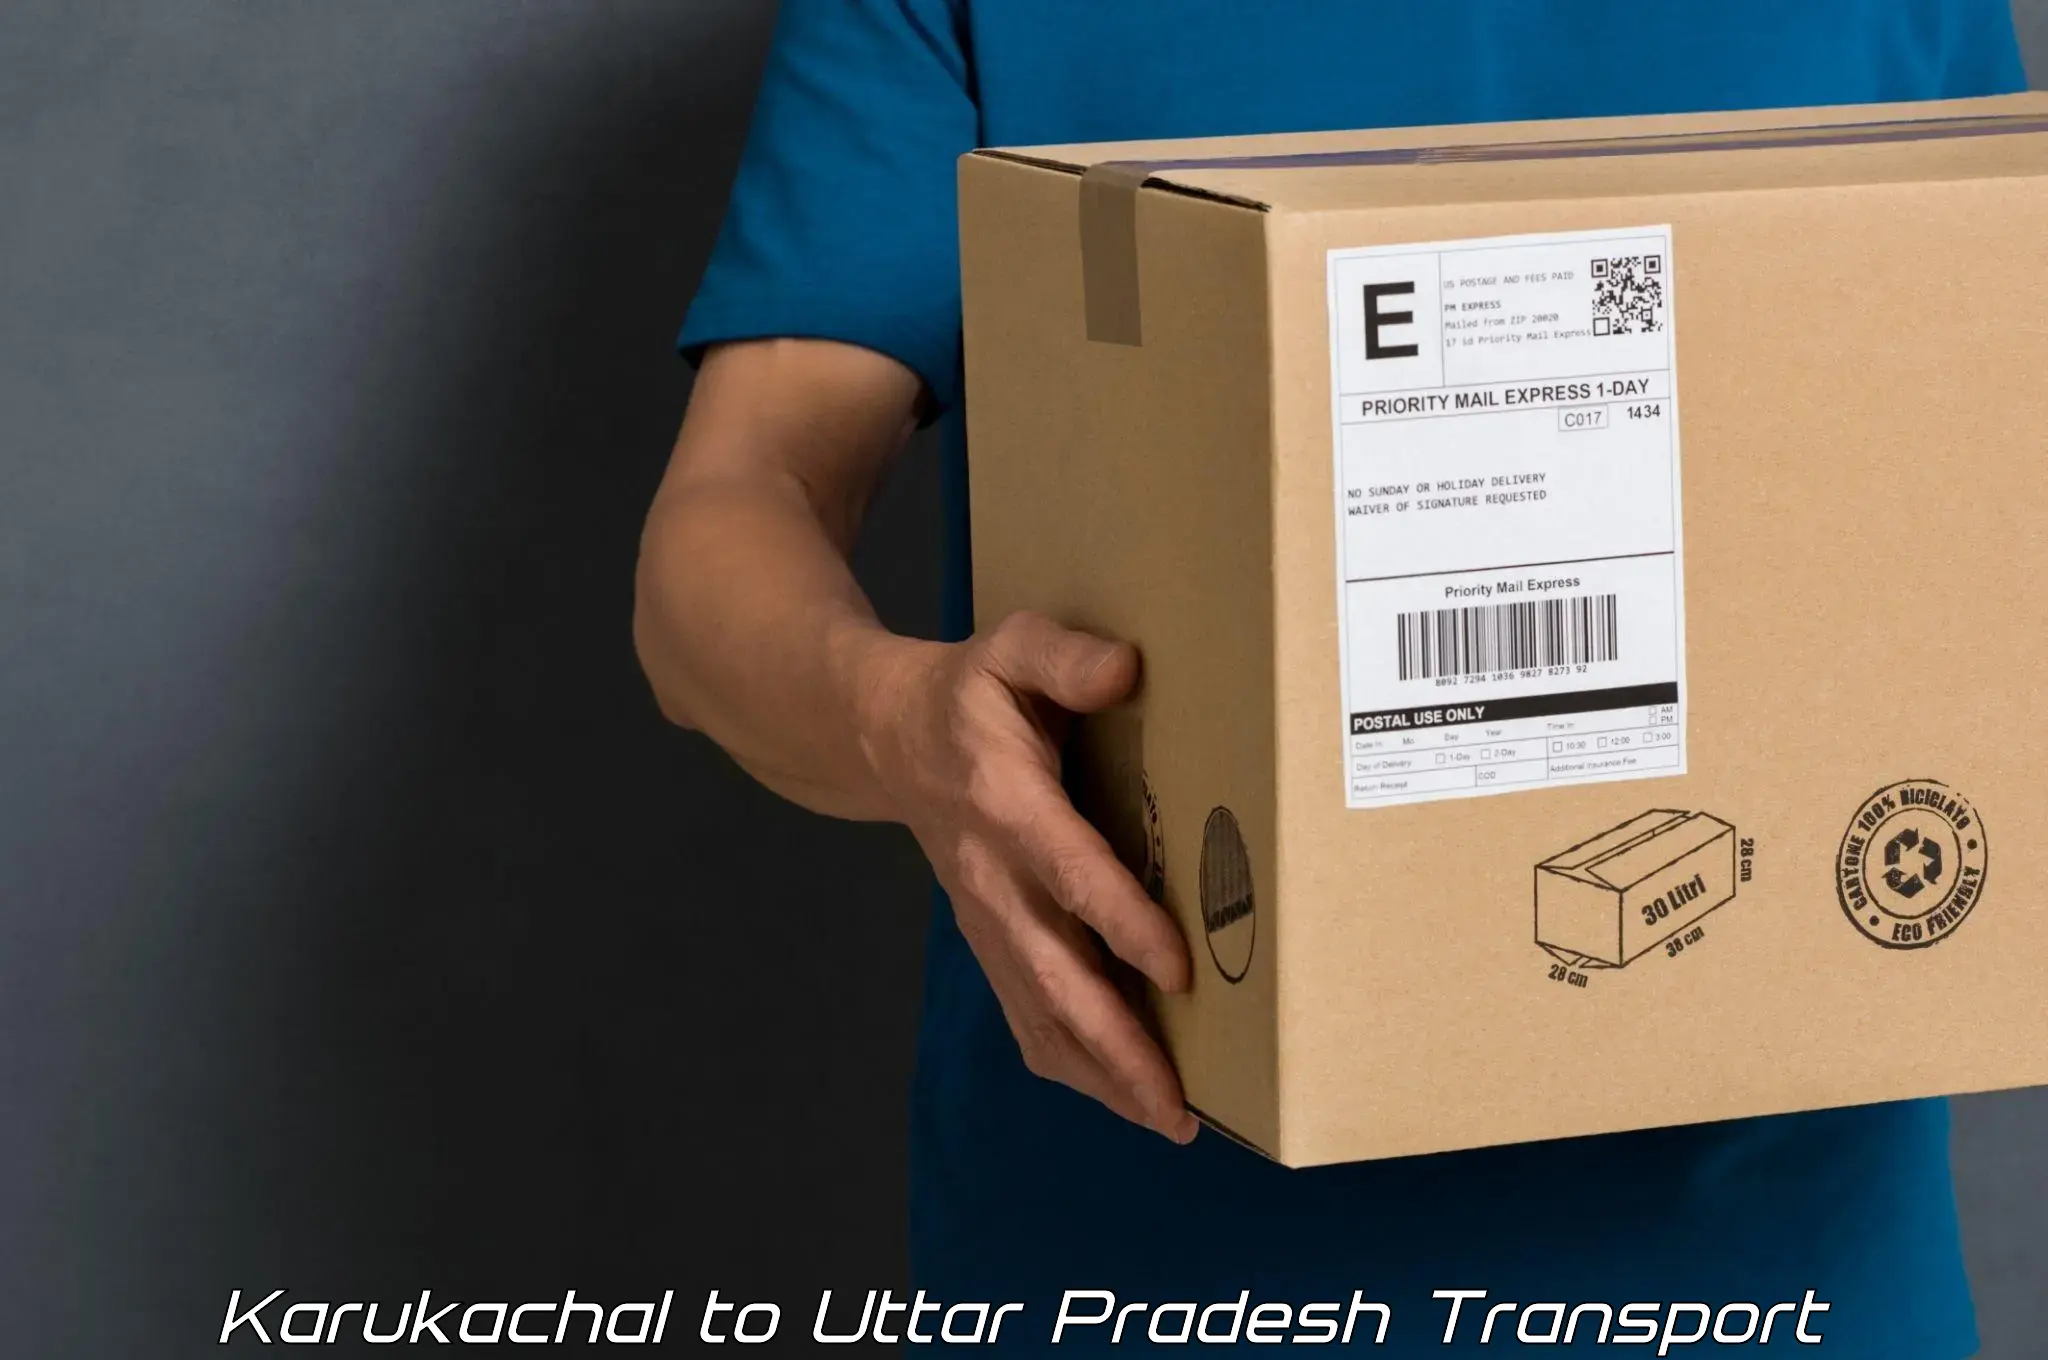 Truck transport companies in India Karukachal to Utraula